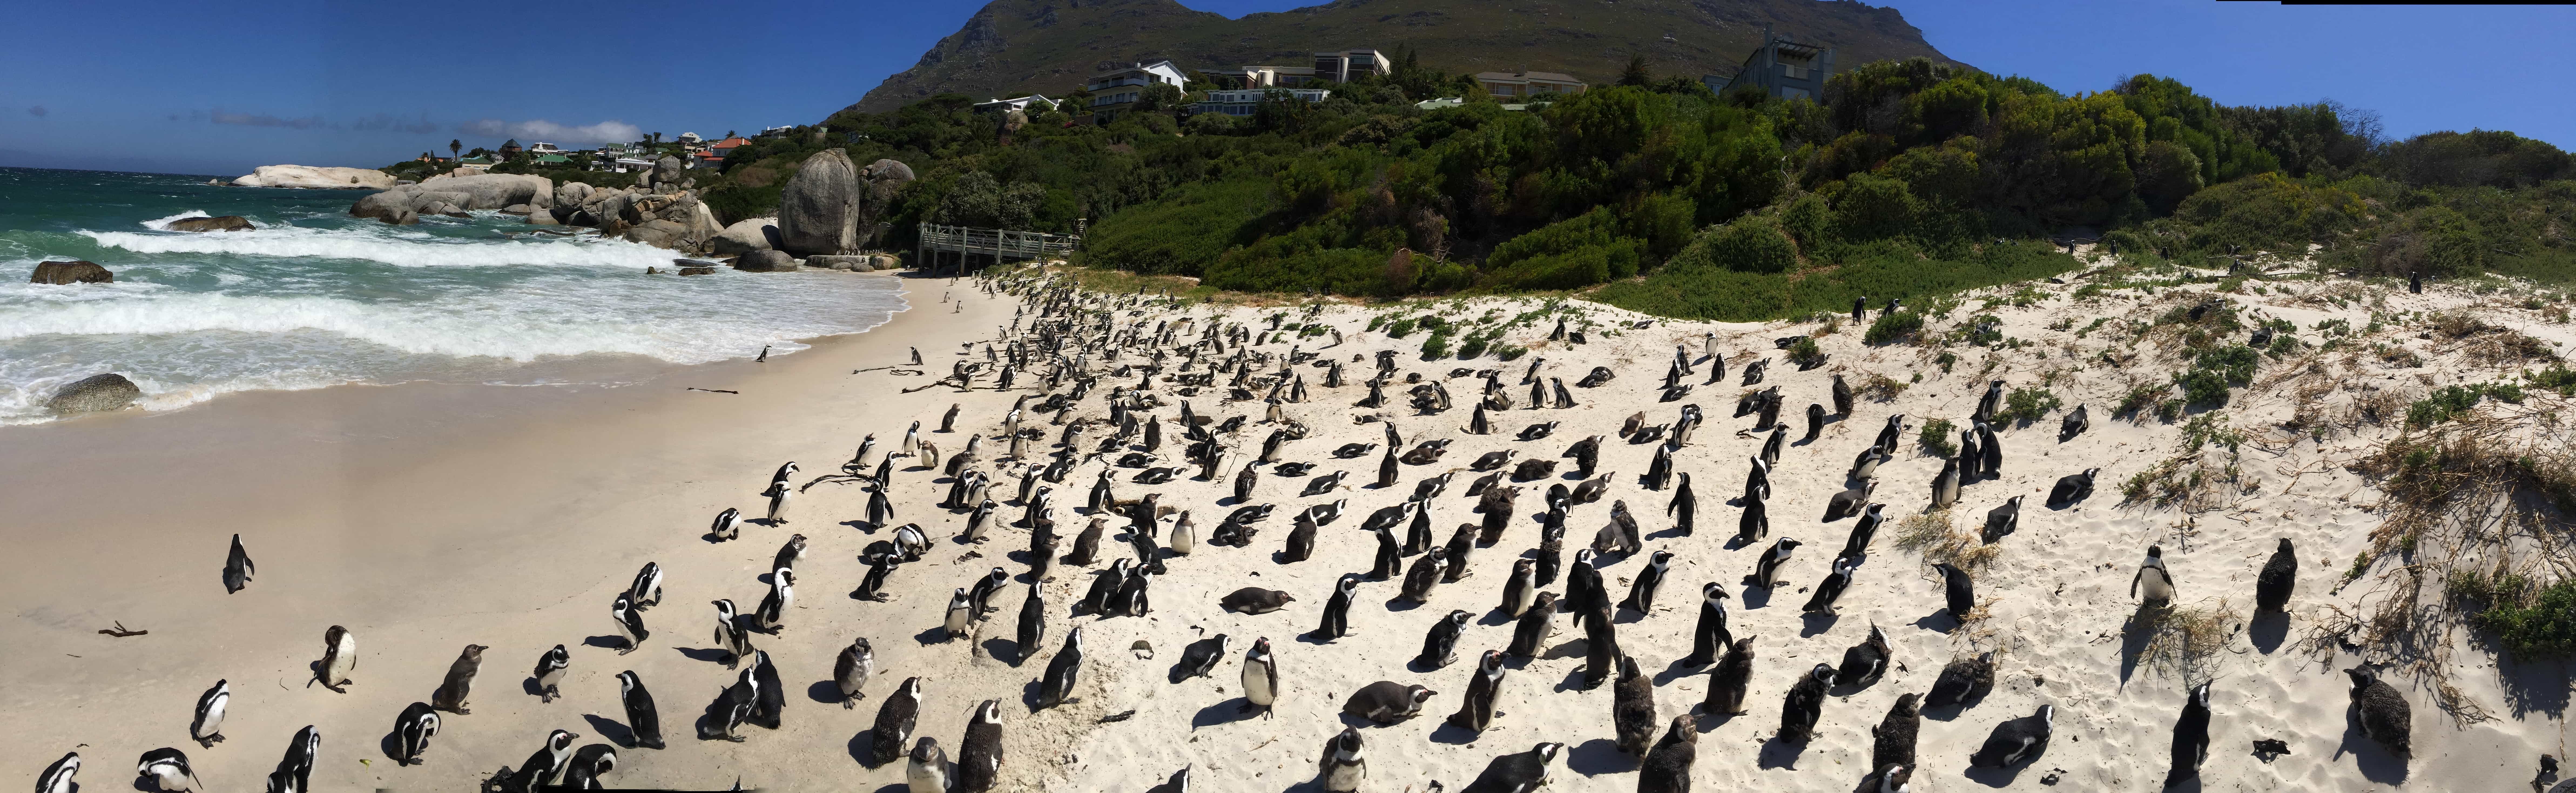 penguin beach in cape town